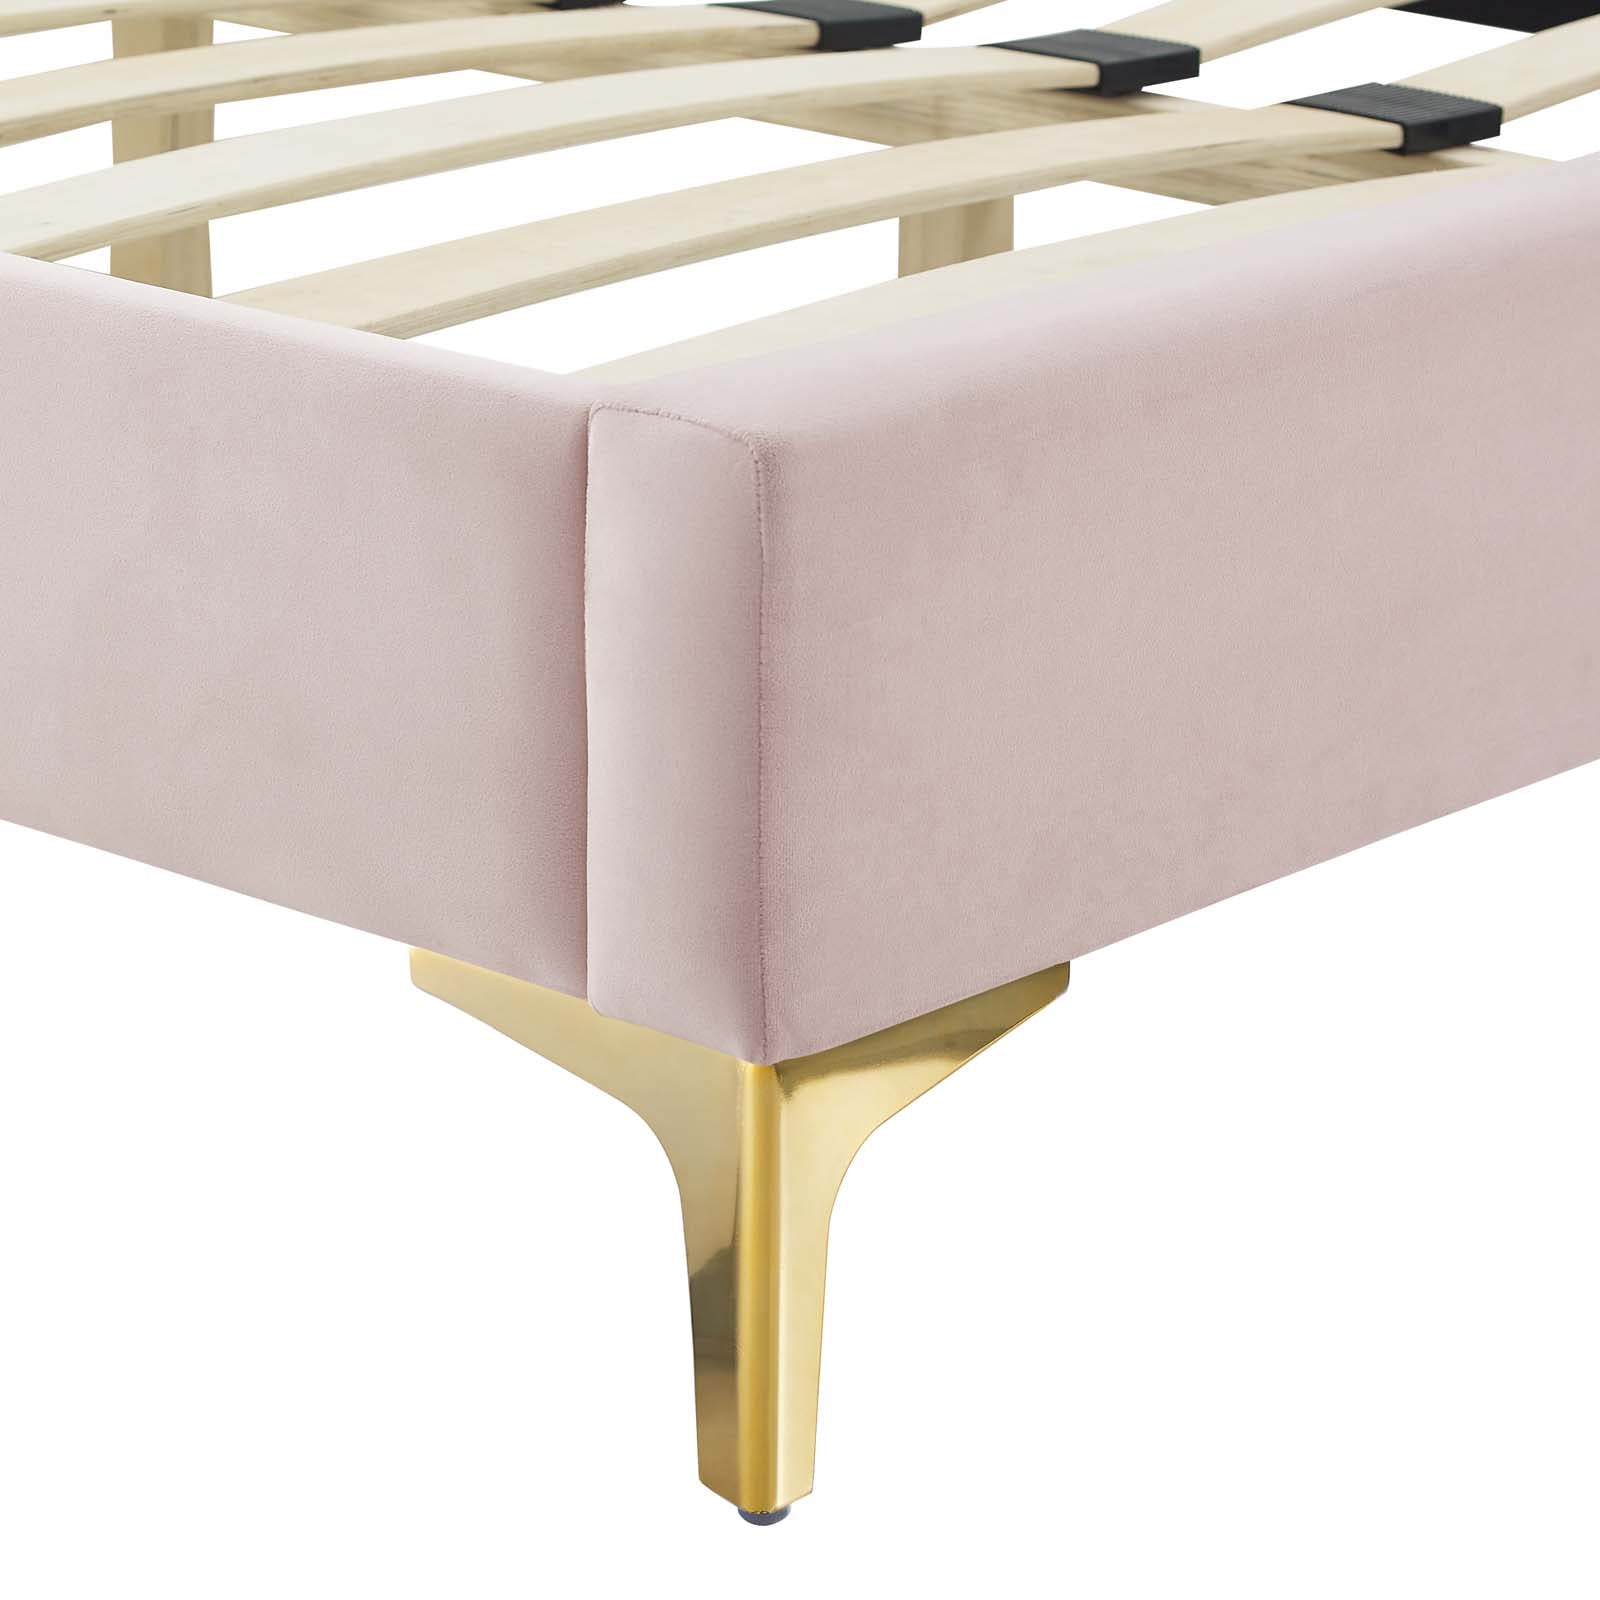 Sienna Performance Velvet Platform Bed with Gold Metal Legs - East Shore Modern Home Furnishings